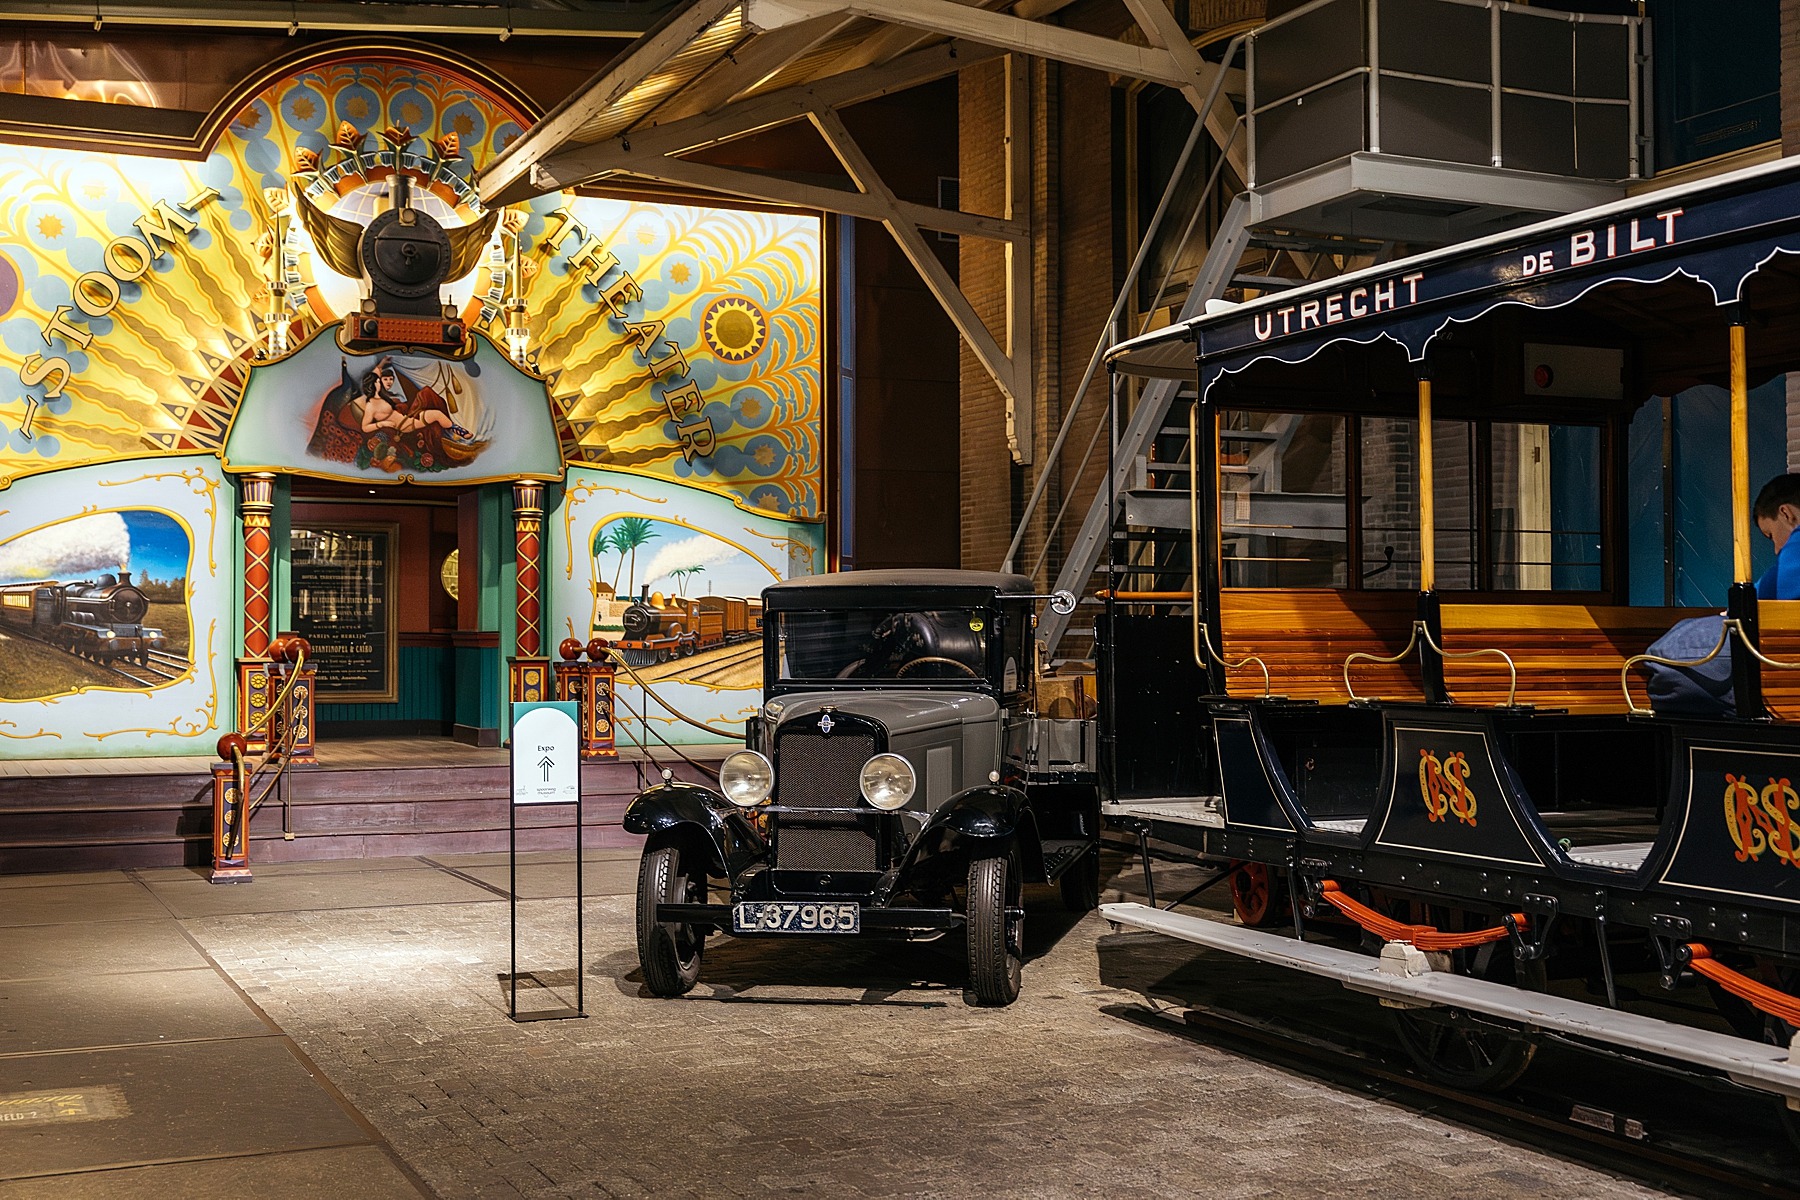 Spoorwegmuseum, l'incroyable musée du train de Utrecht 20